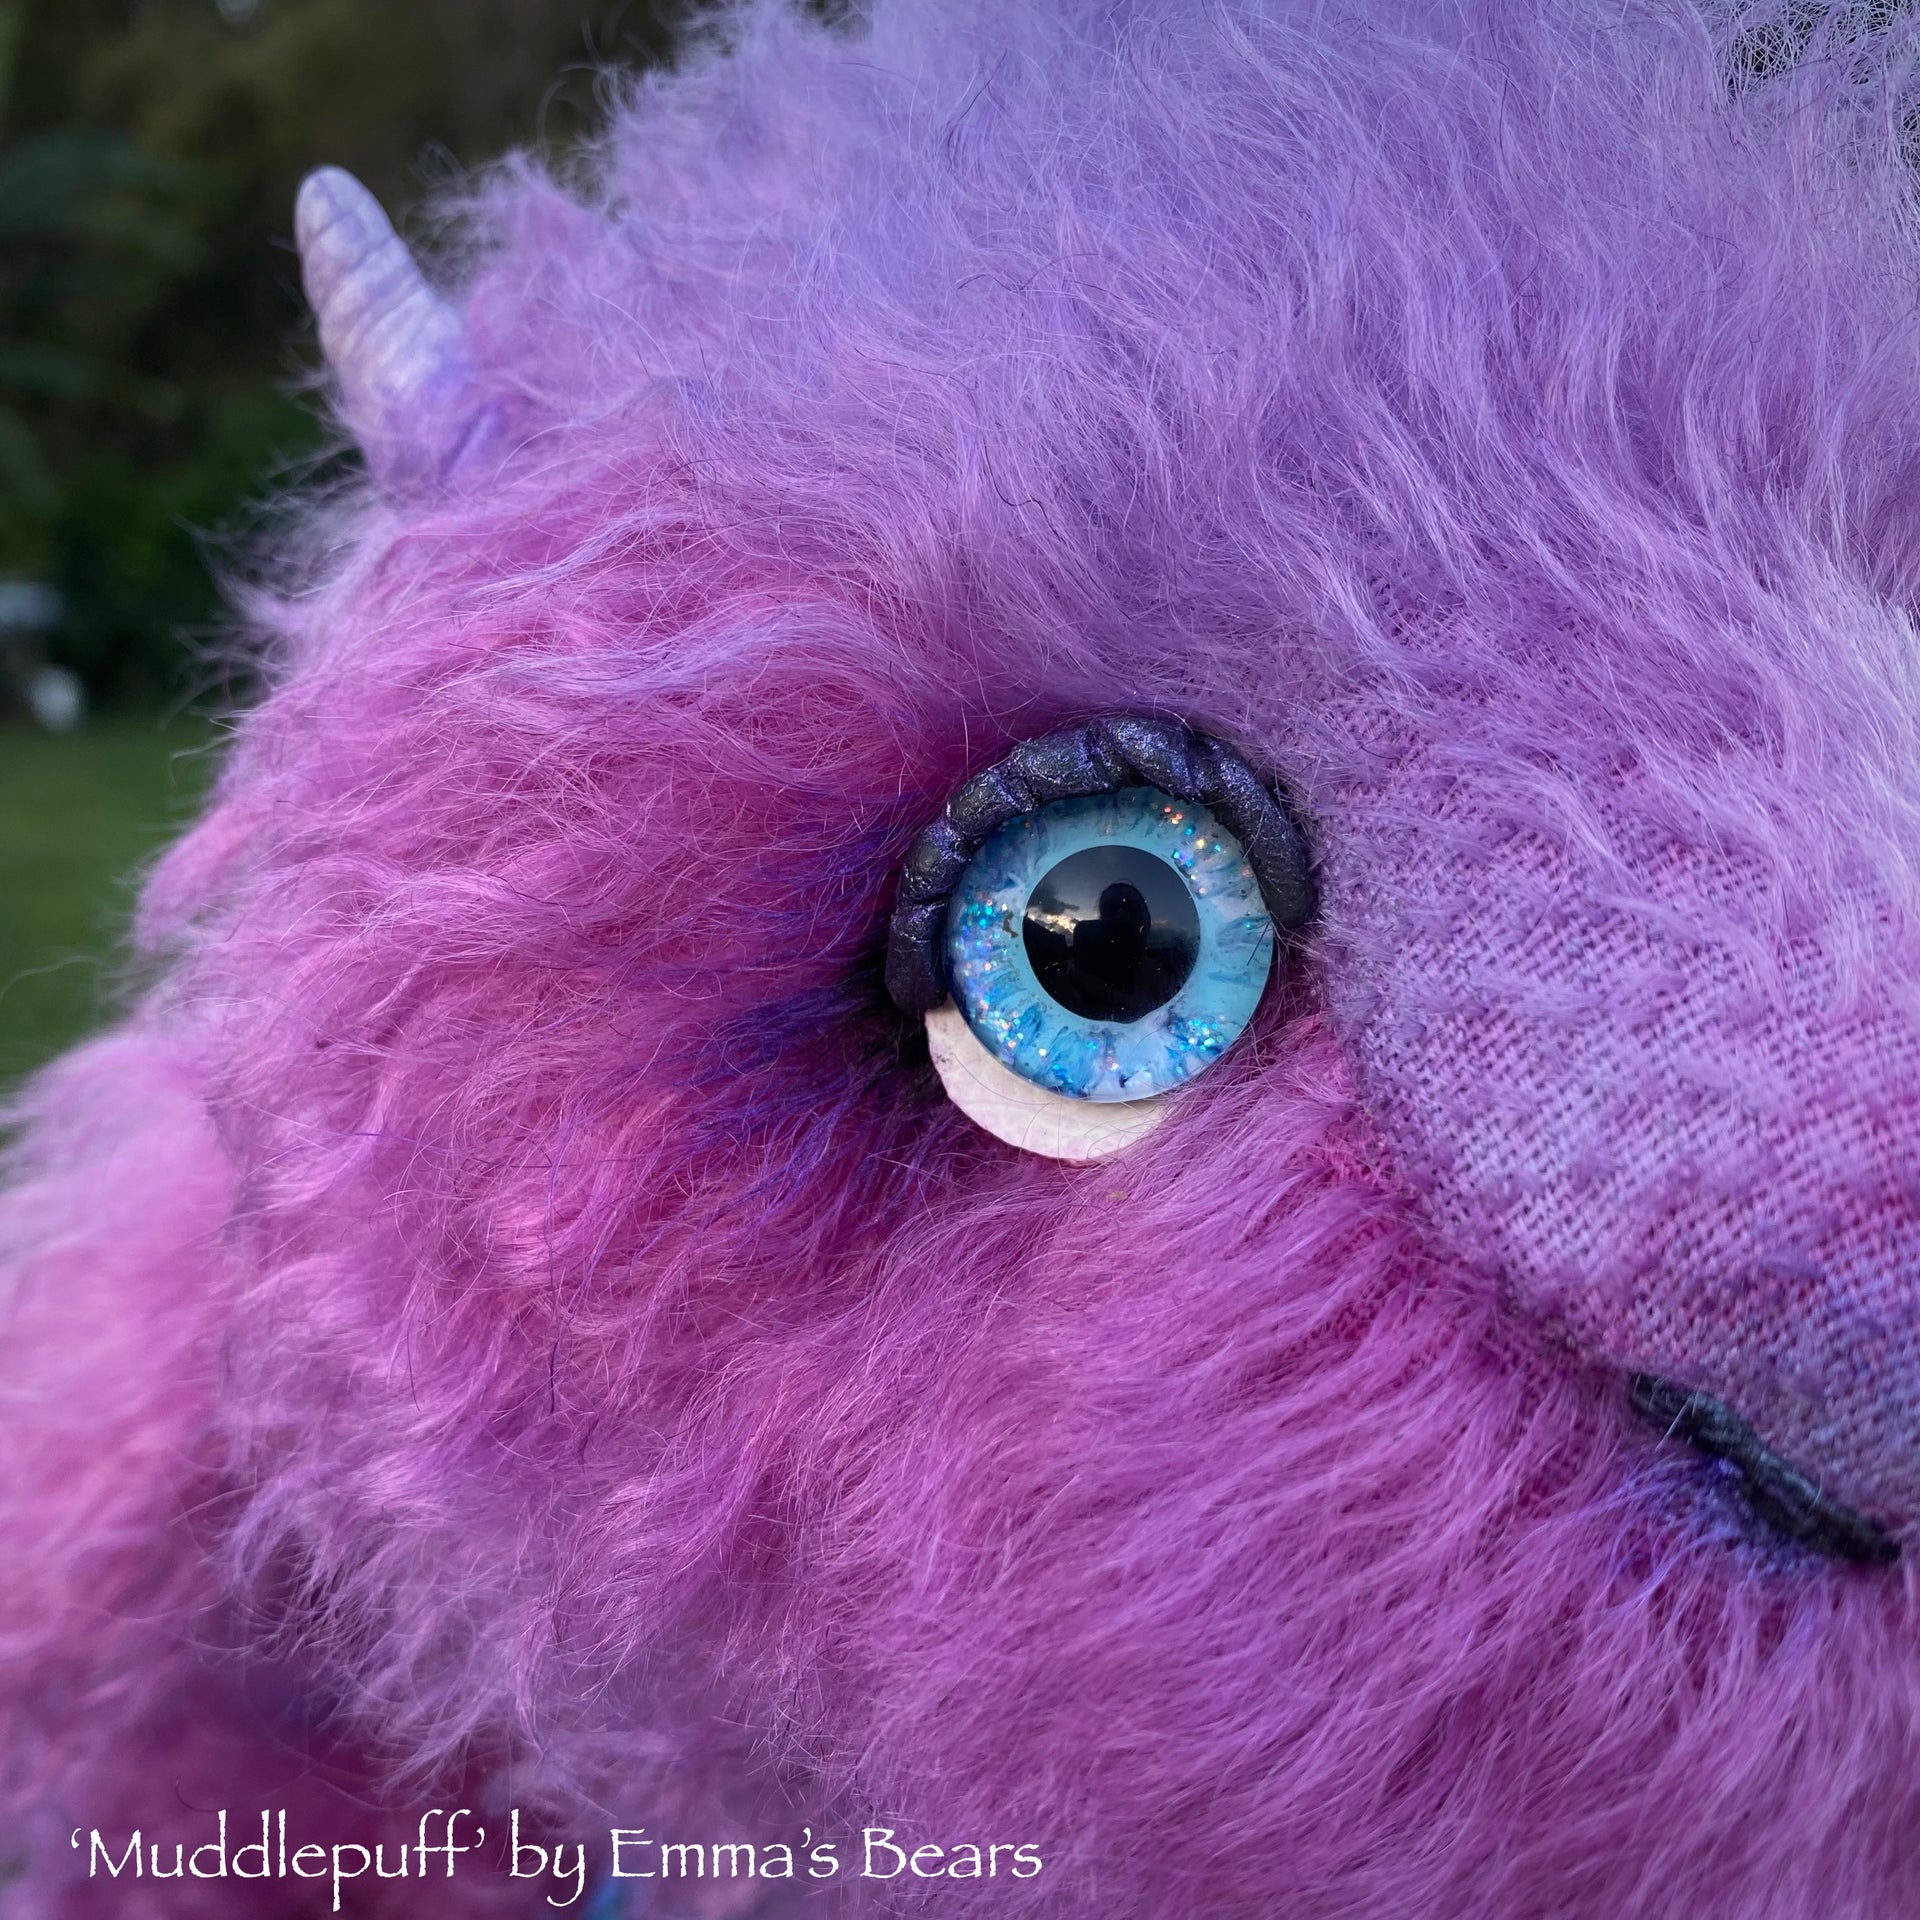 Muddlepuff - 15" hand-dyed curlylocks mohair Artist Baby Dragon by Emmas Bears - OOAK